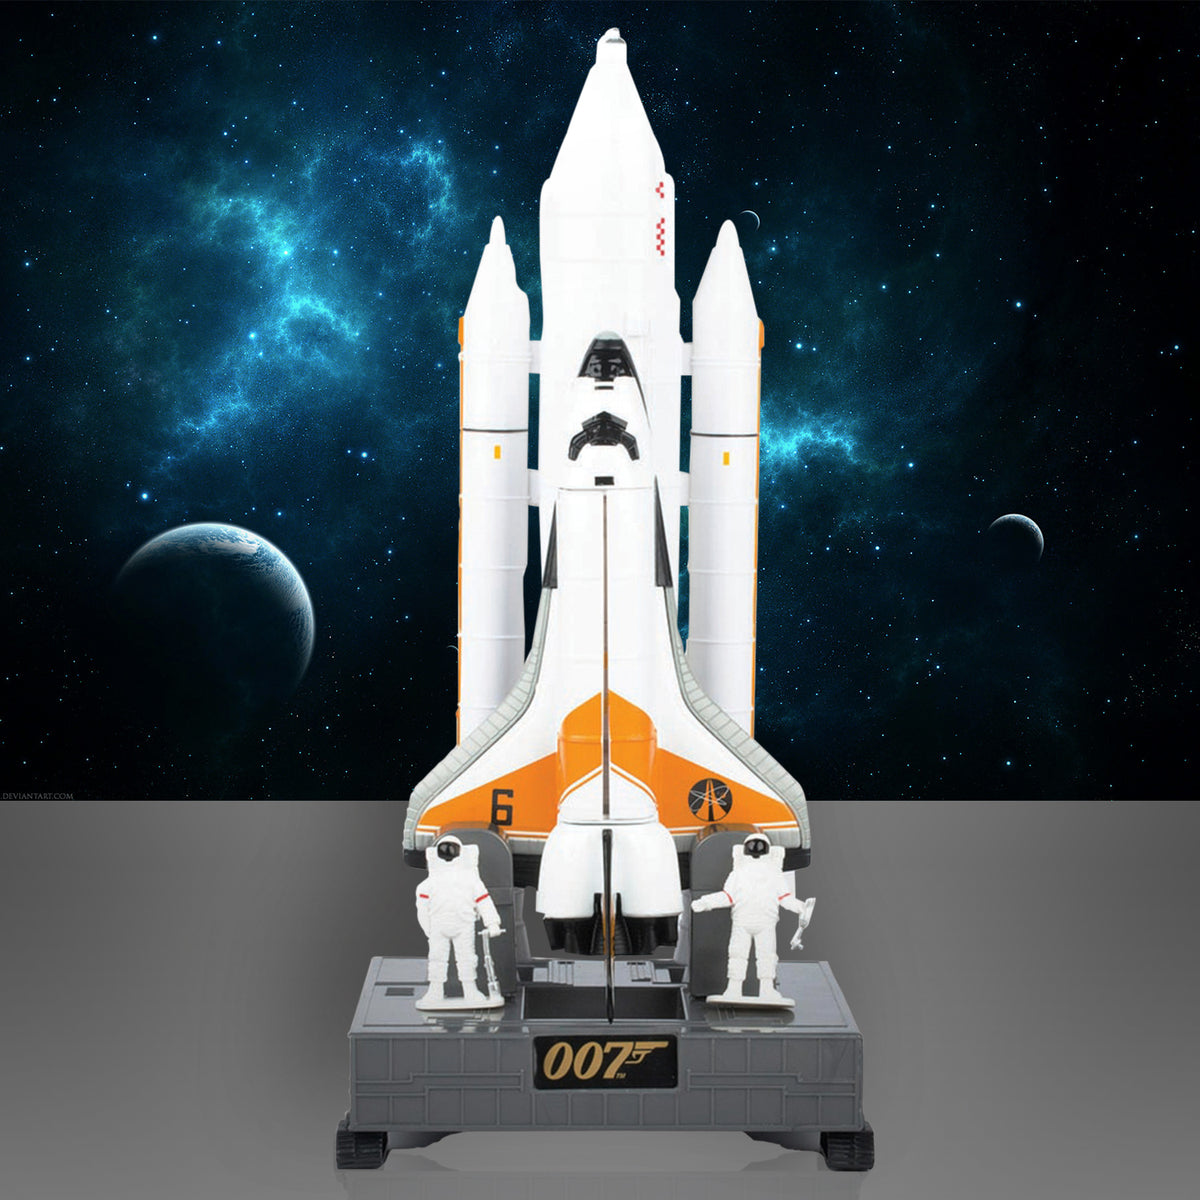 James Bond Space Shuttle Model - Moonraker Edition - By Motormax